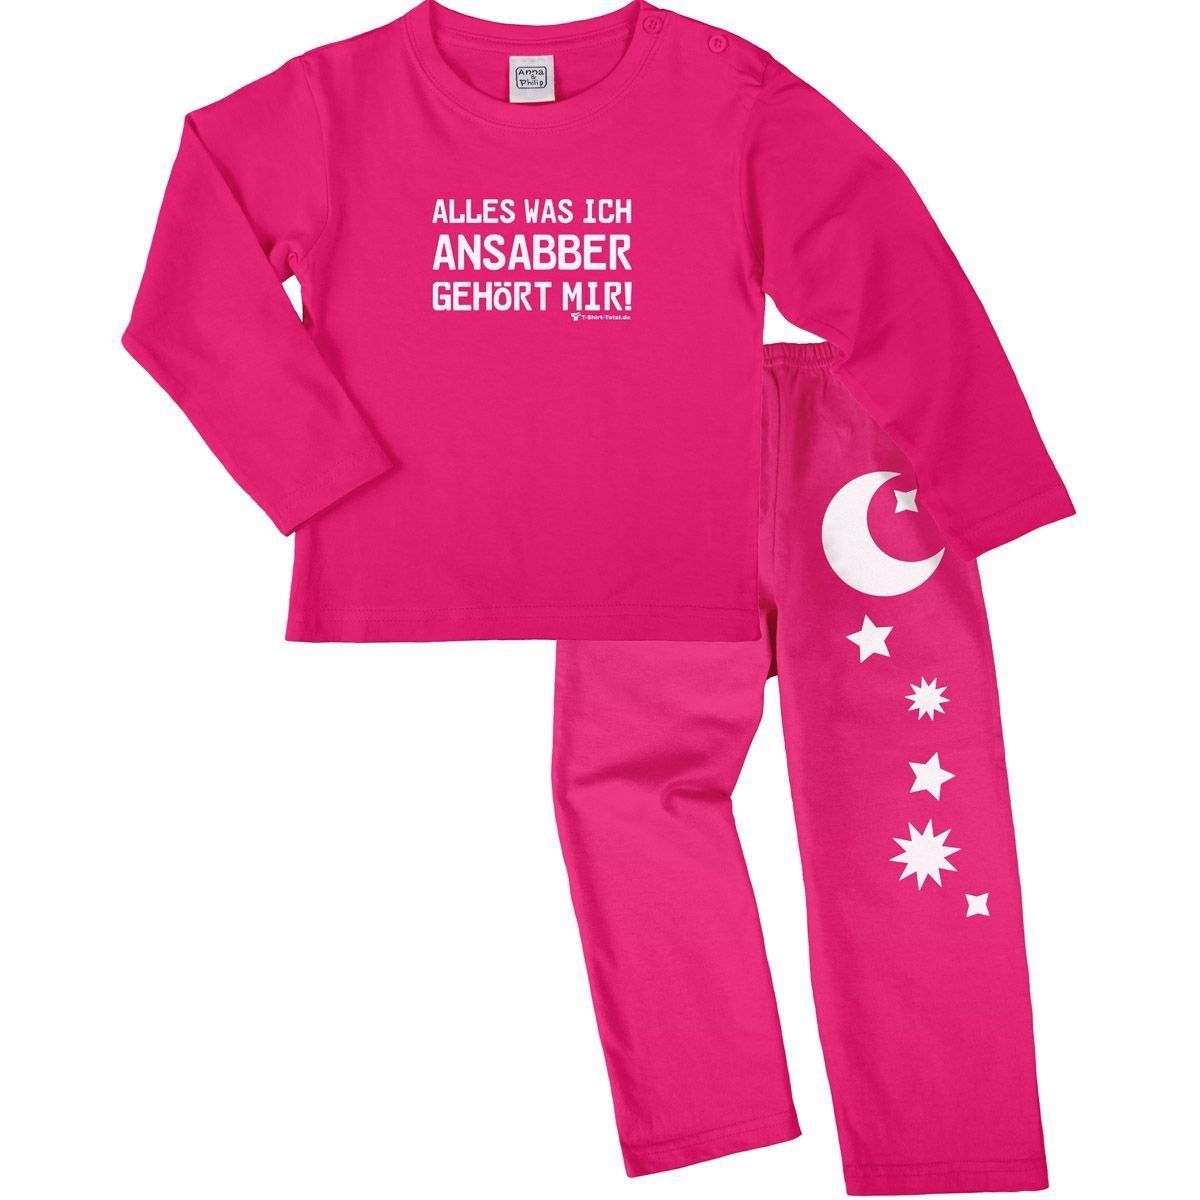 Ansabbern Pyjama Set pink / pink 68 / 74